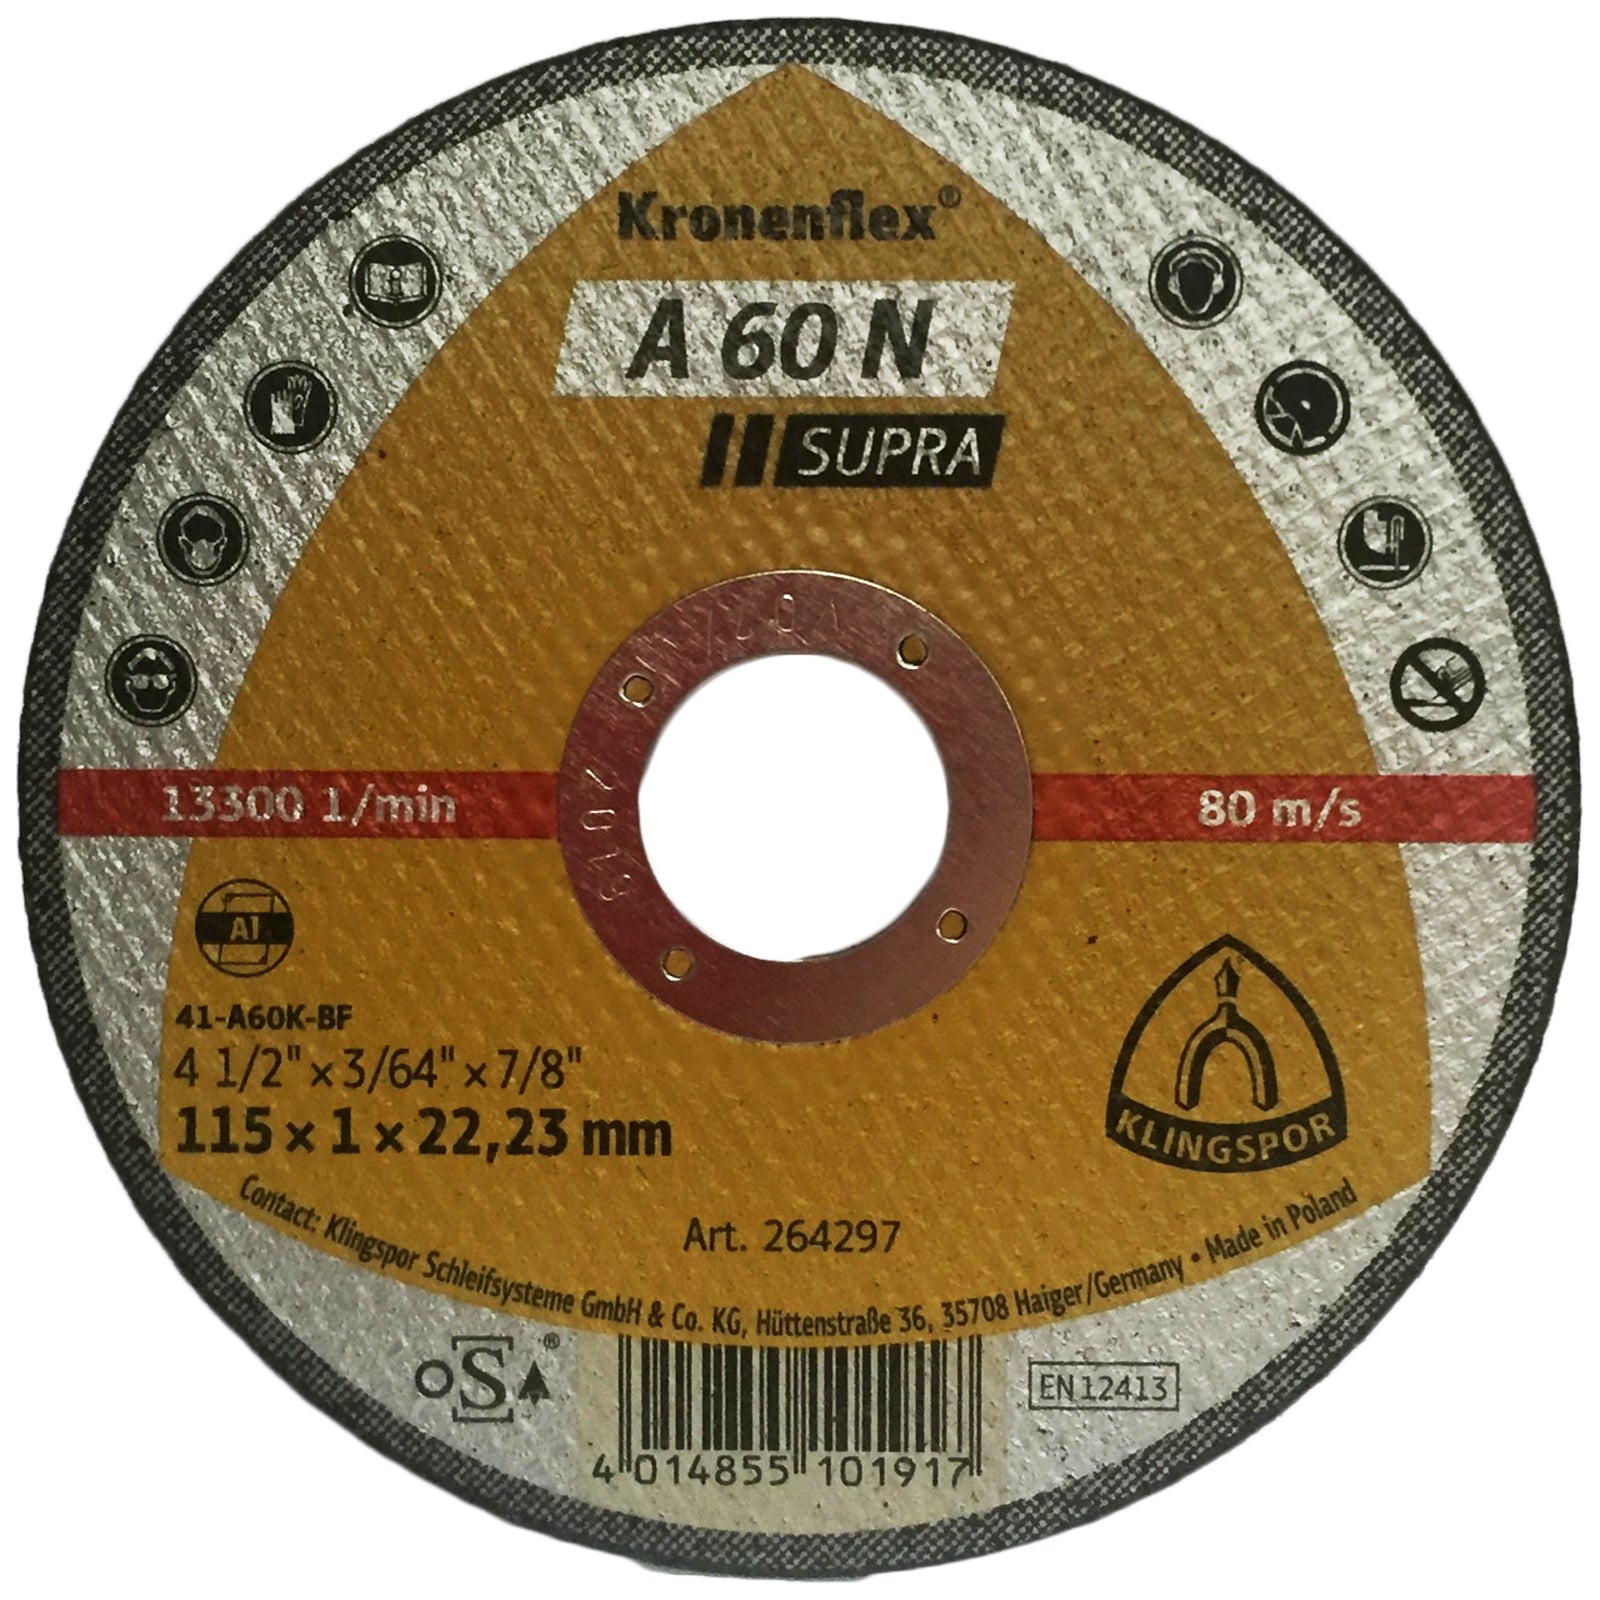 Klingspor A60N Supra 1mm Aluminium Cutting Discs 115mm 125mm Diameter